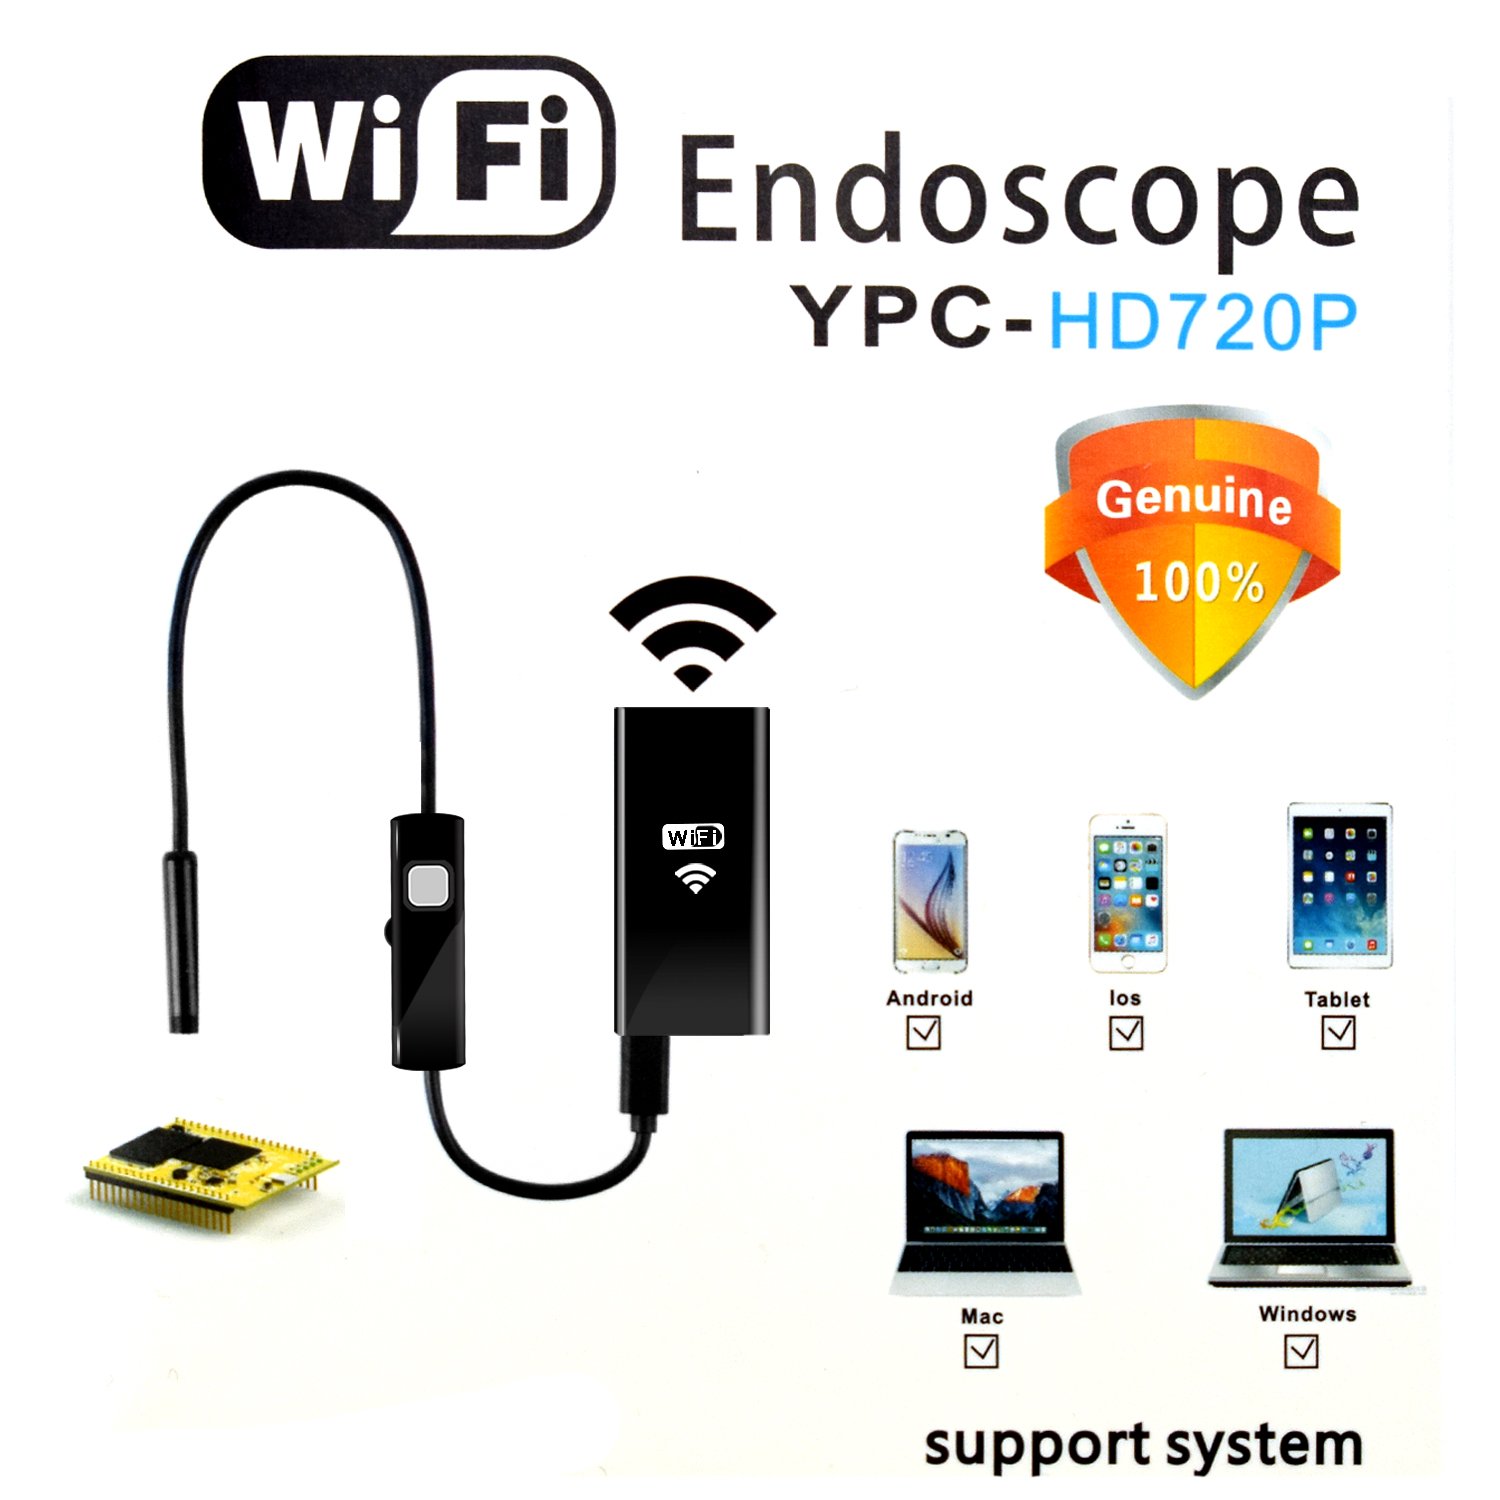 Endoscope hd720p wifi password